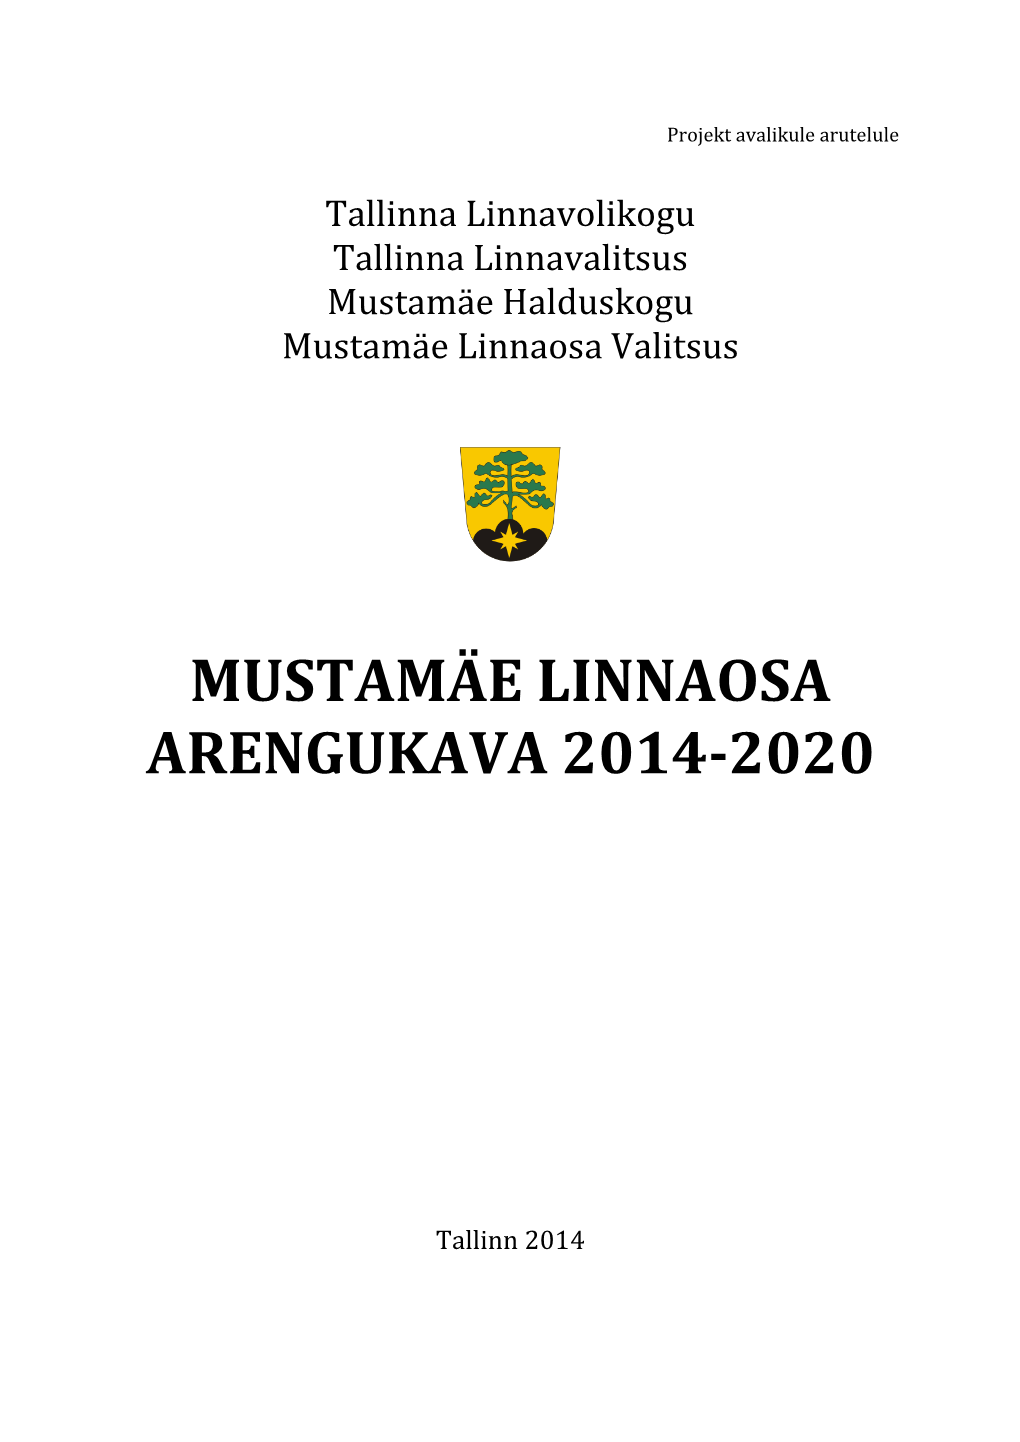 Mustamäe Linnaosa Arengukava 2014-2020